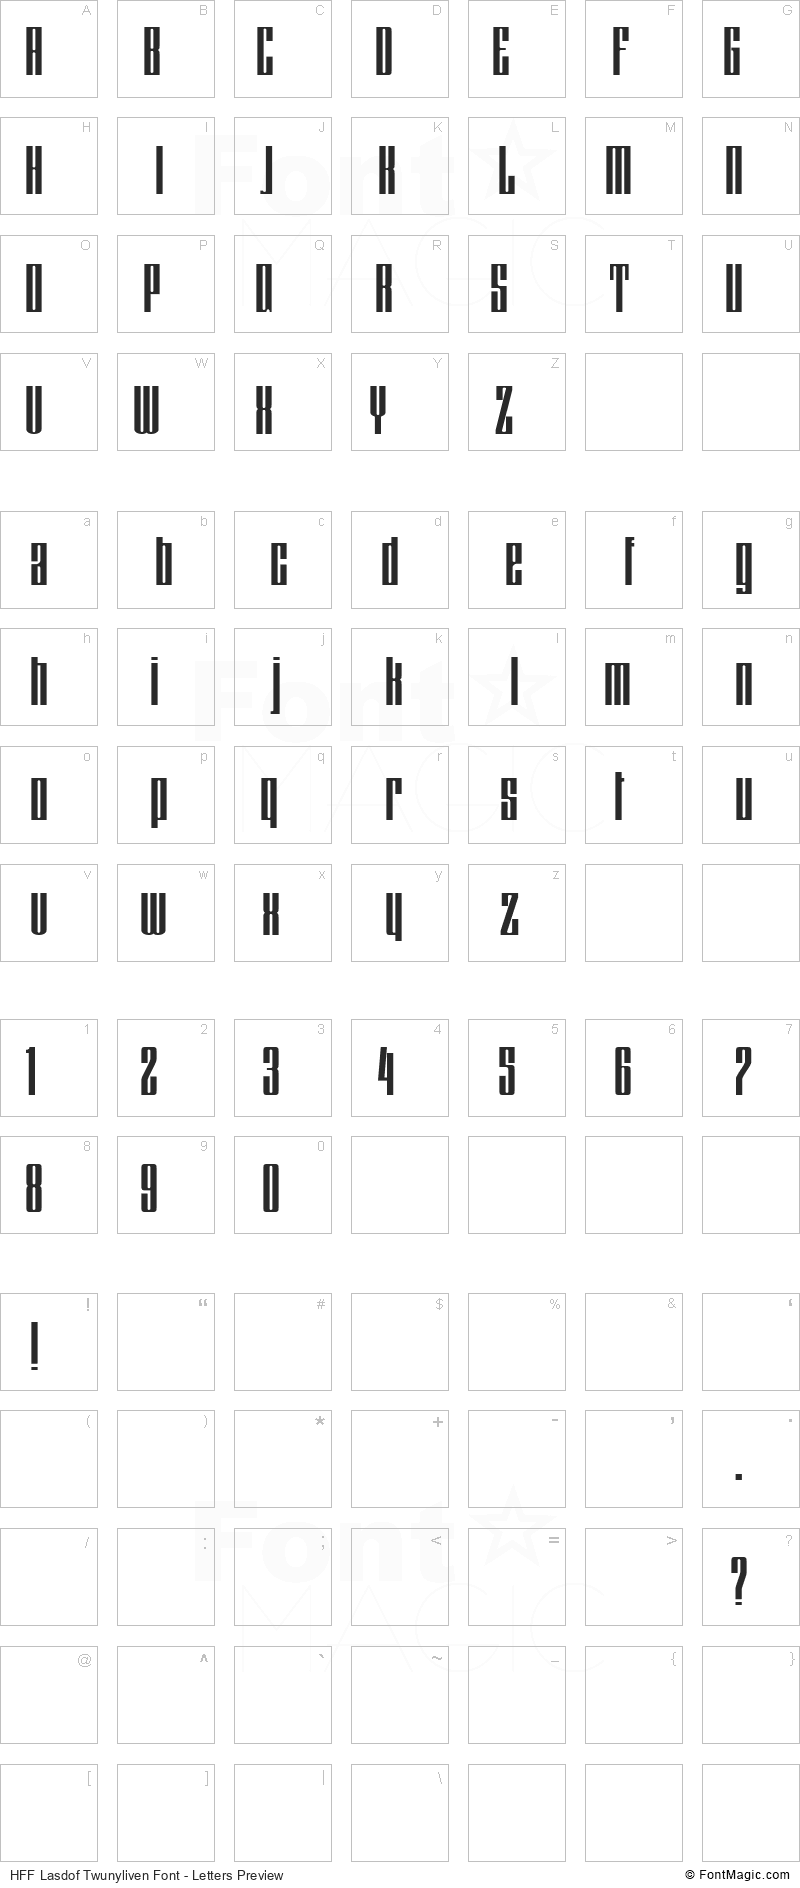 HFF Lasdof Twunyliven Font - All Latters Preview Chart